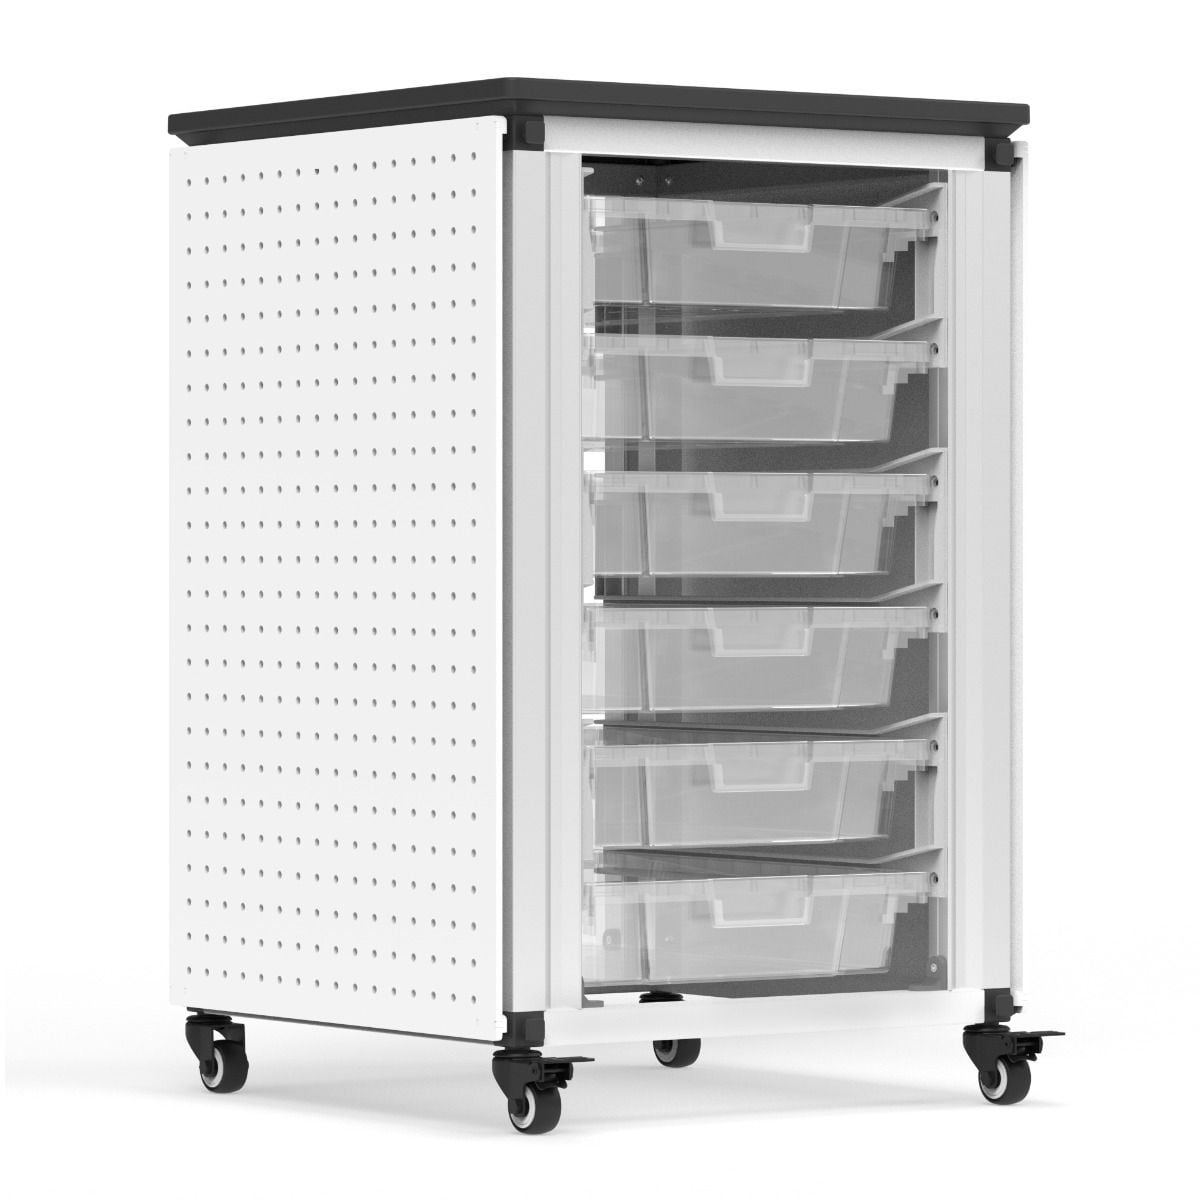 Modular Classroom Storage Cabinet - Single module with 6 small